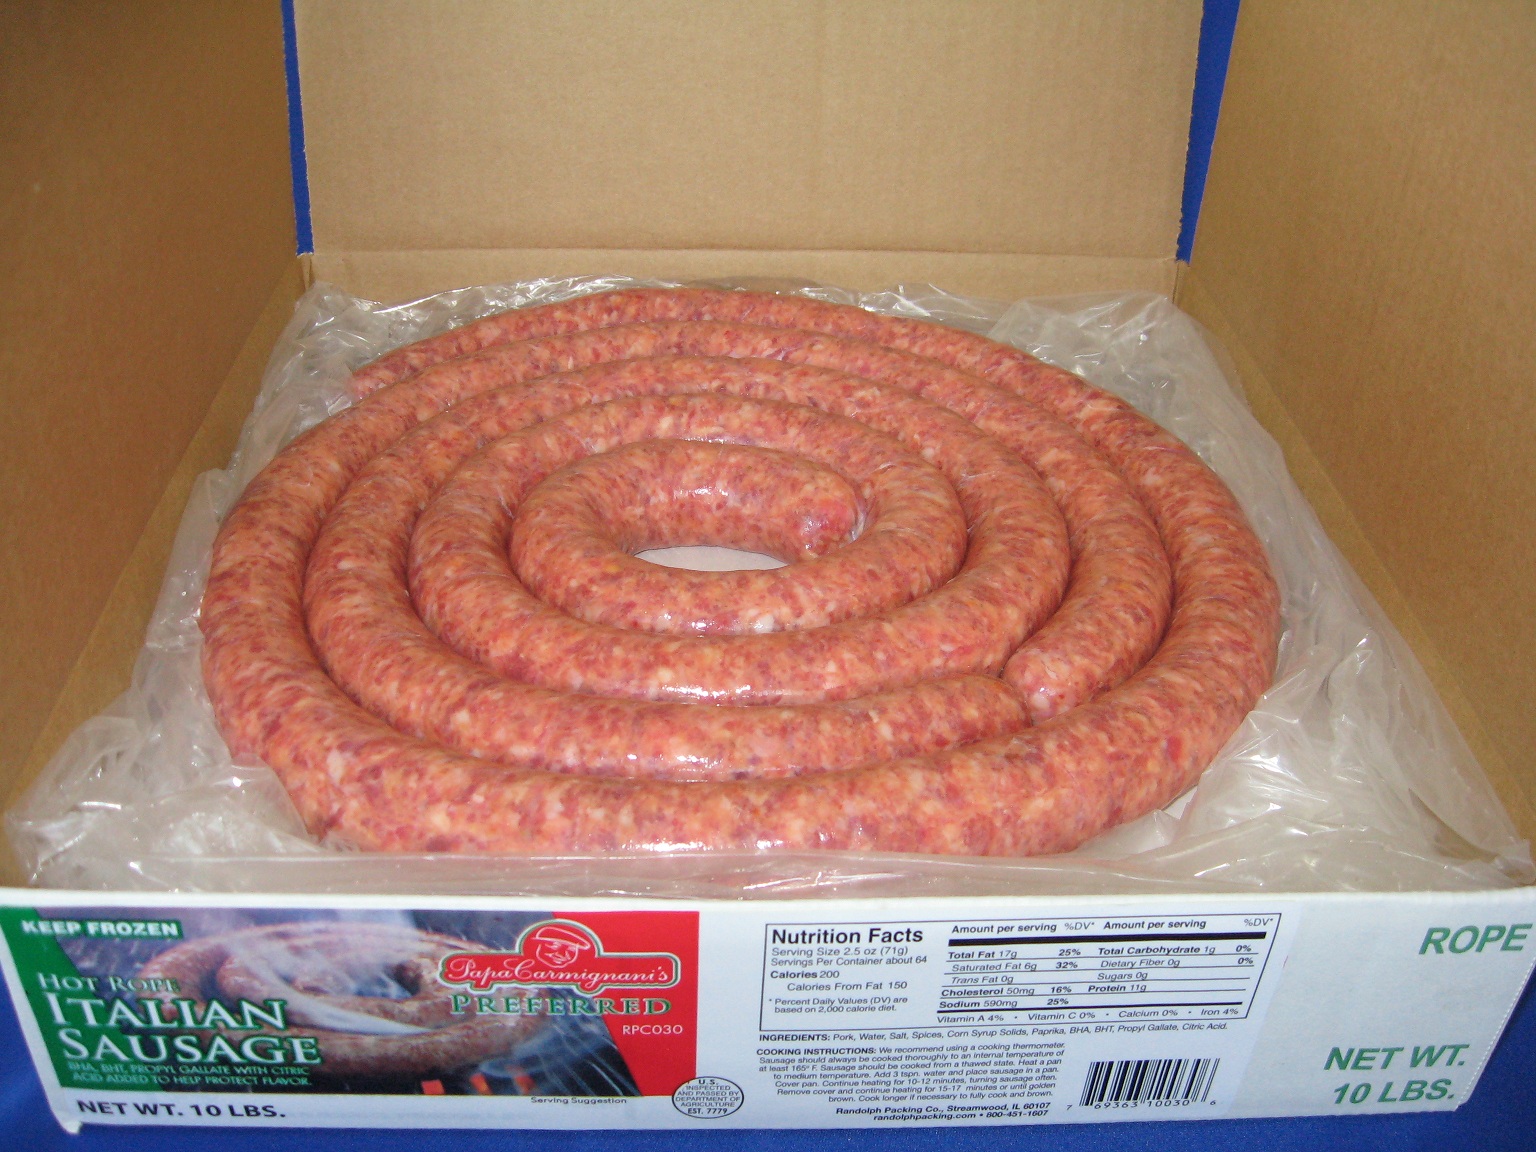 Hot Rope Italian Sausage product image